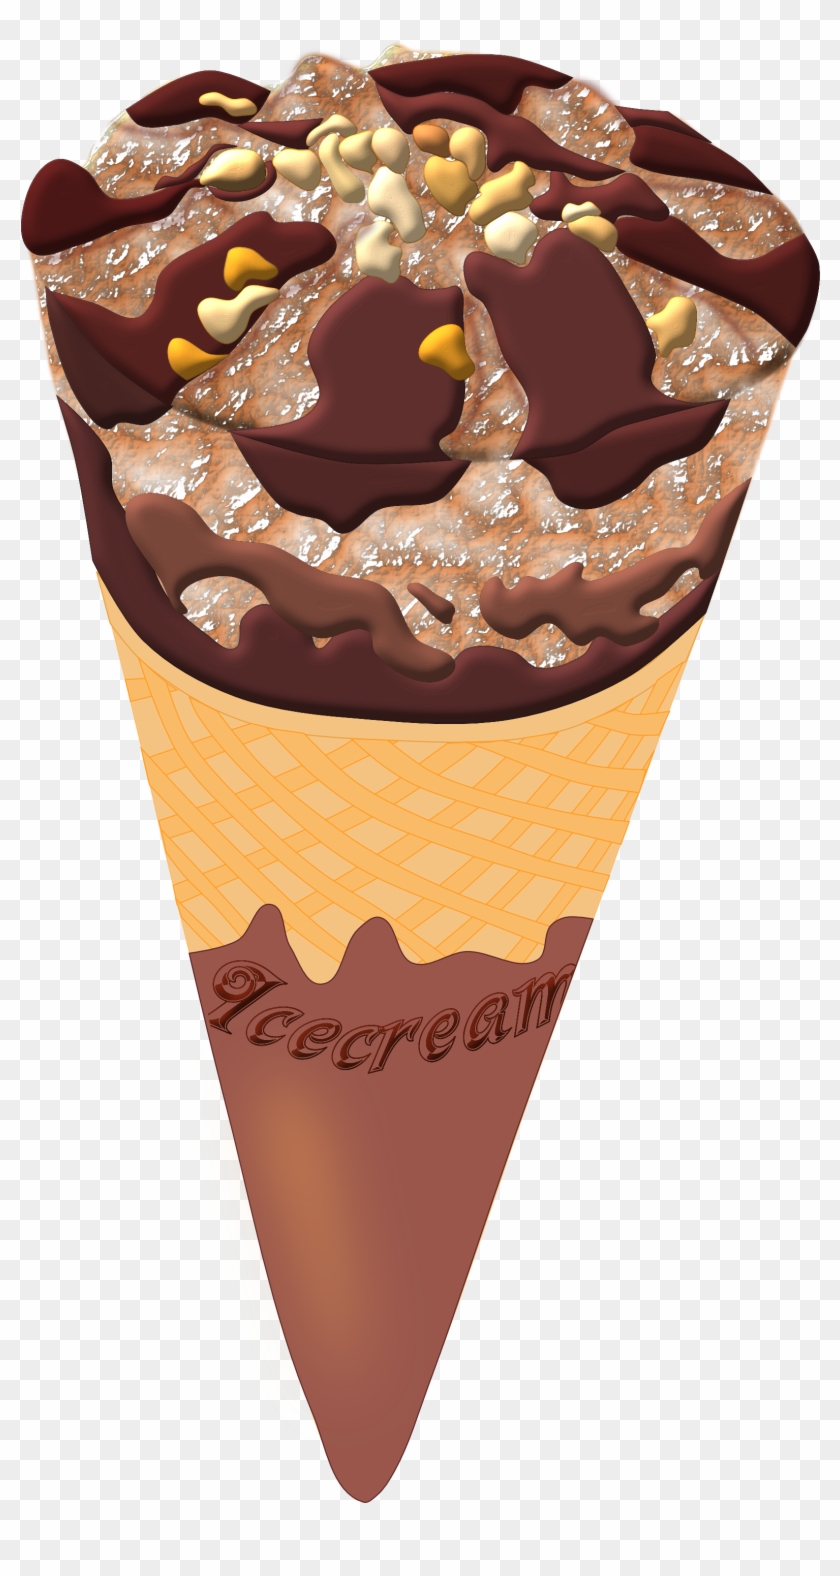 Chocolate Ice Cream Clipart - Chocolate Ice Cream With Cone #558445